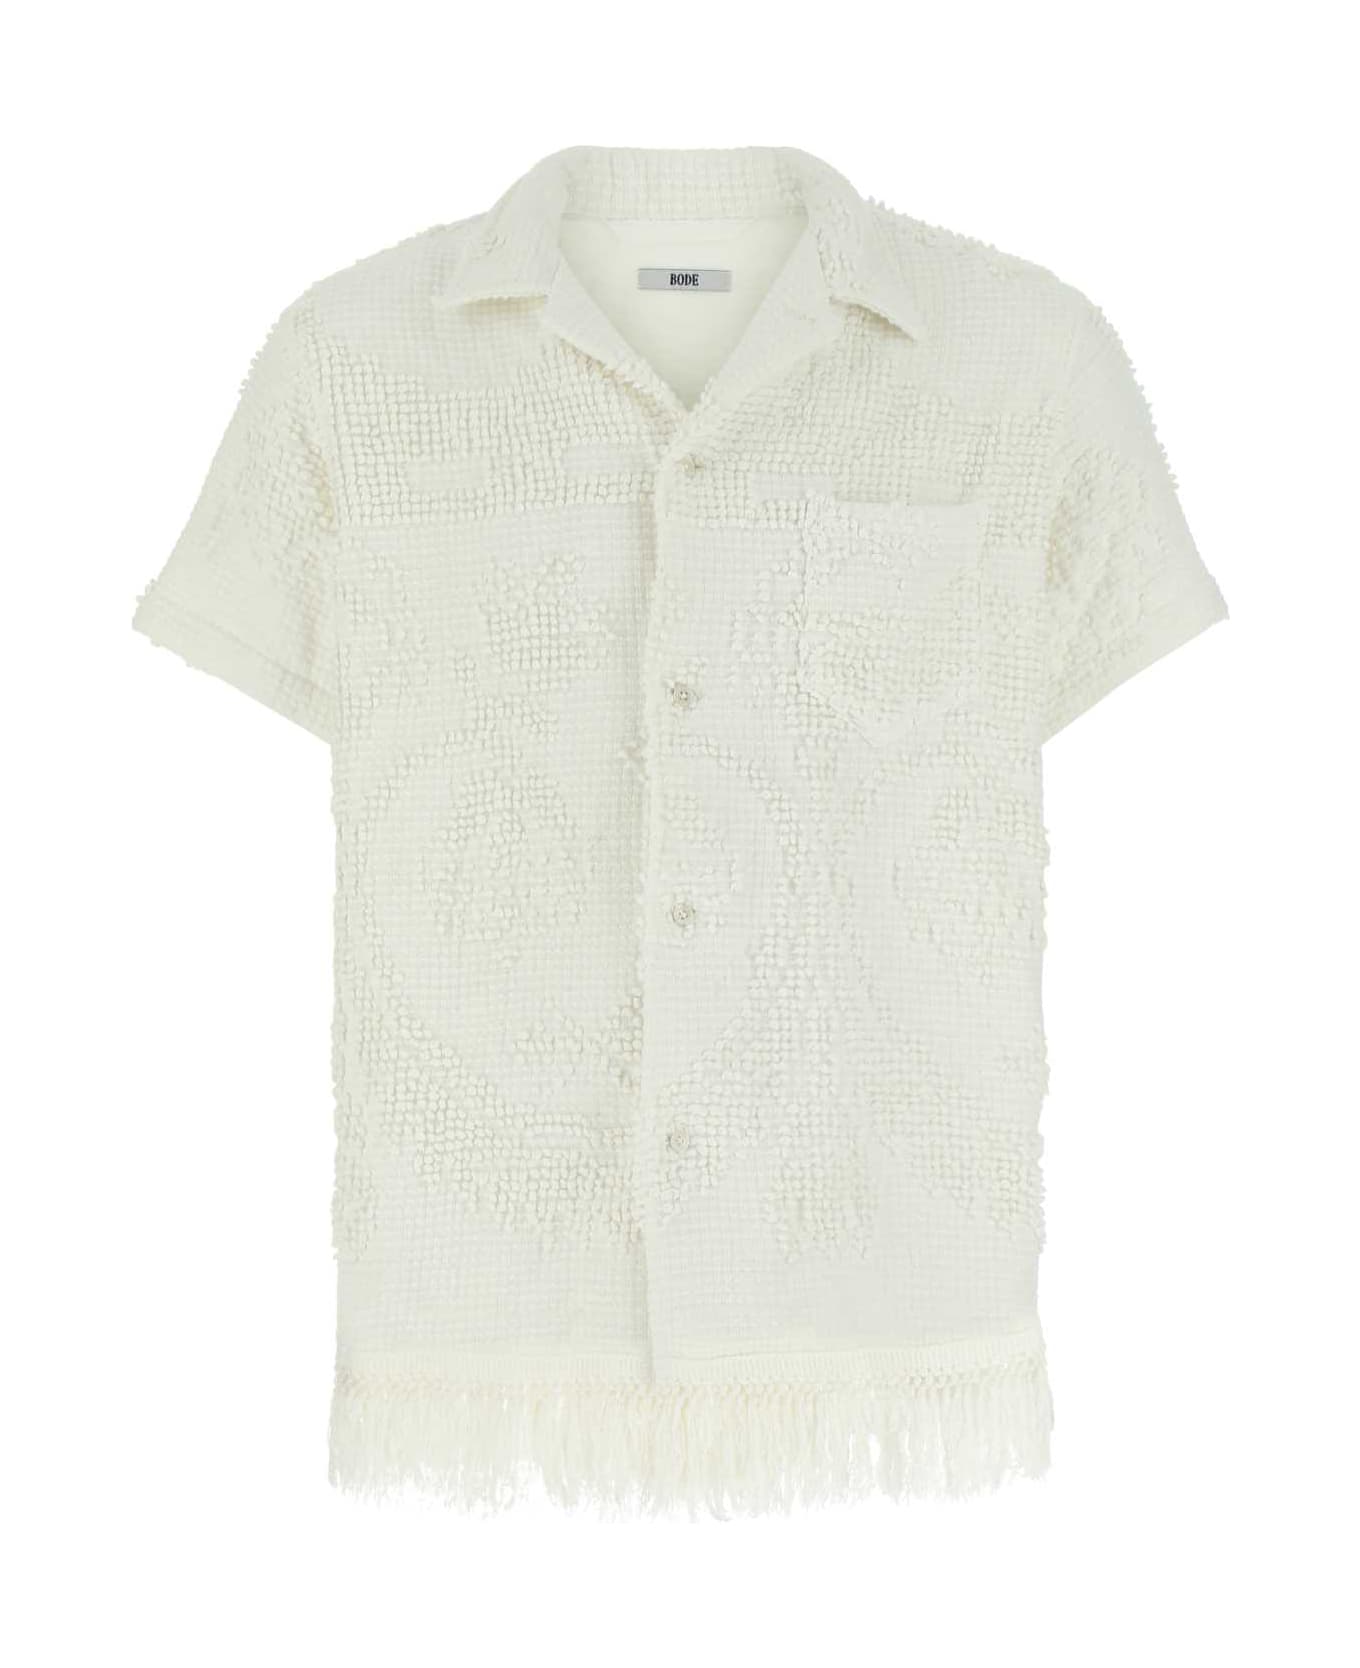 Bode White Terry Fabric Shirt - WTMLT